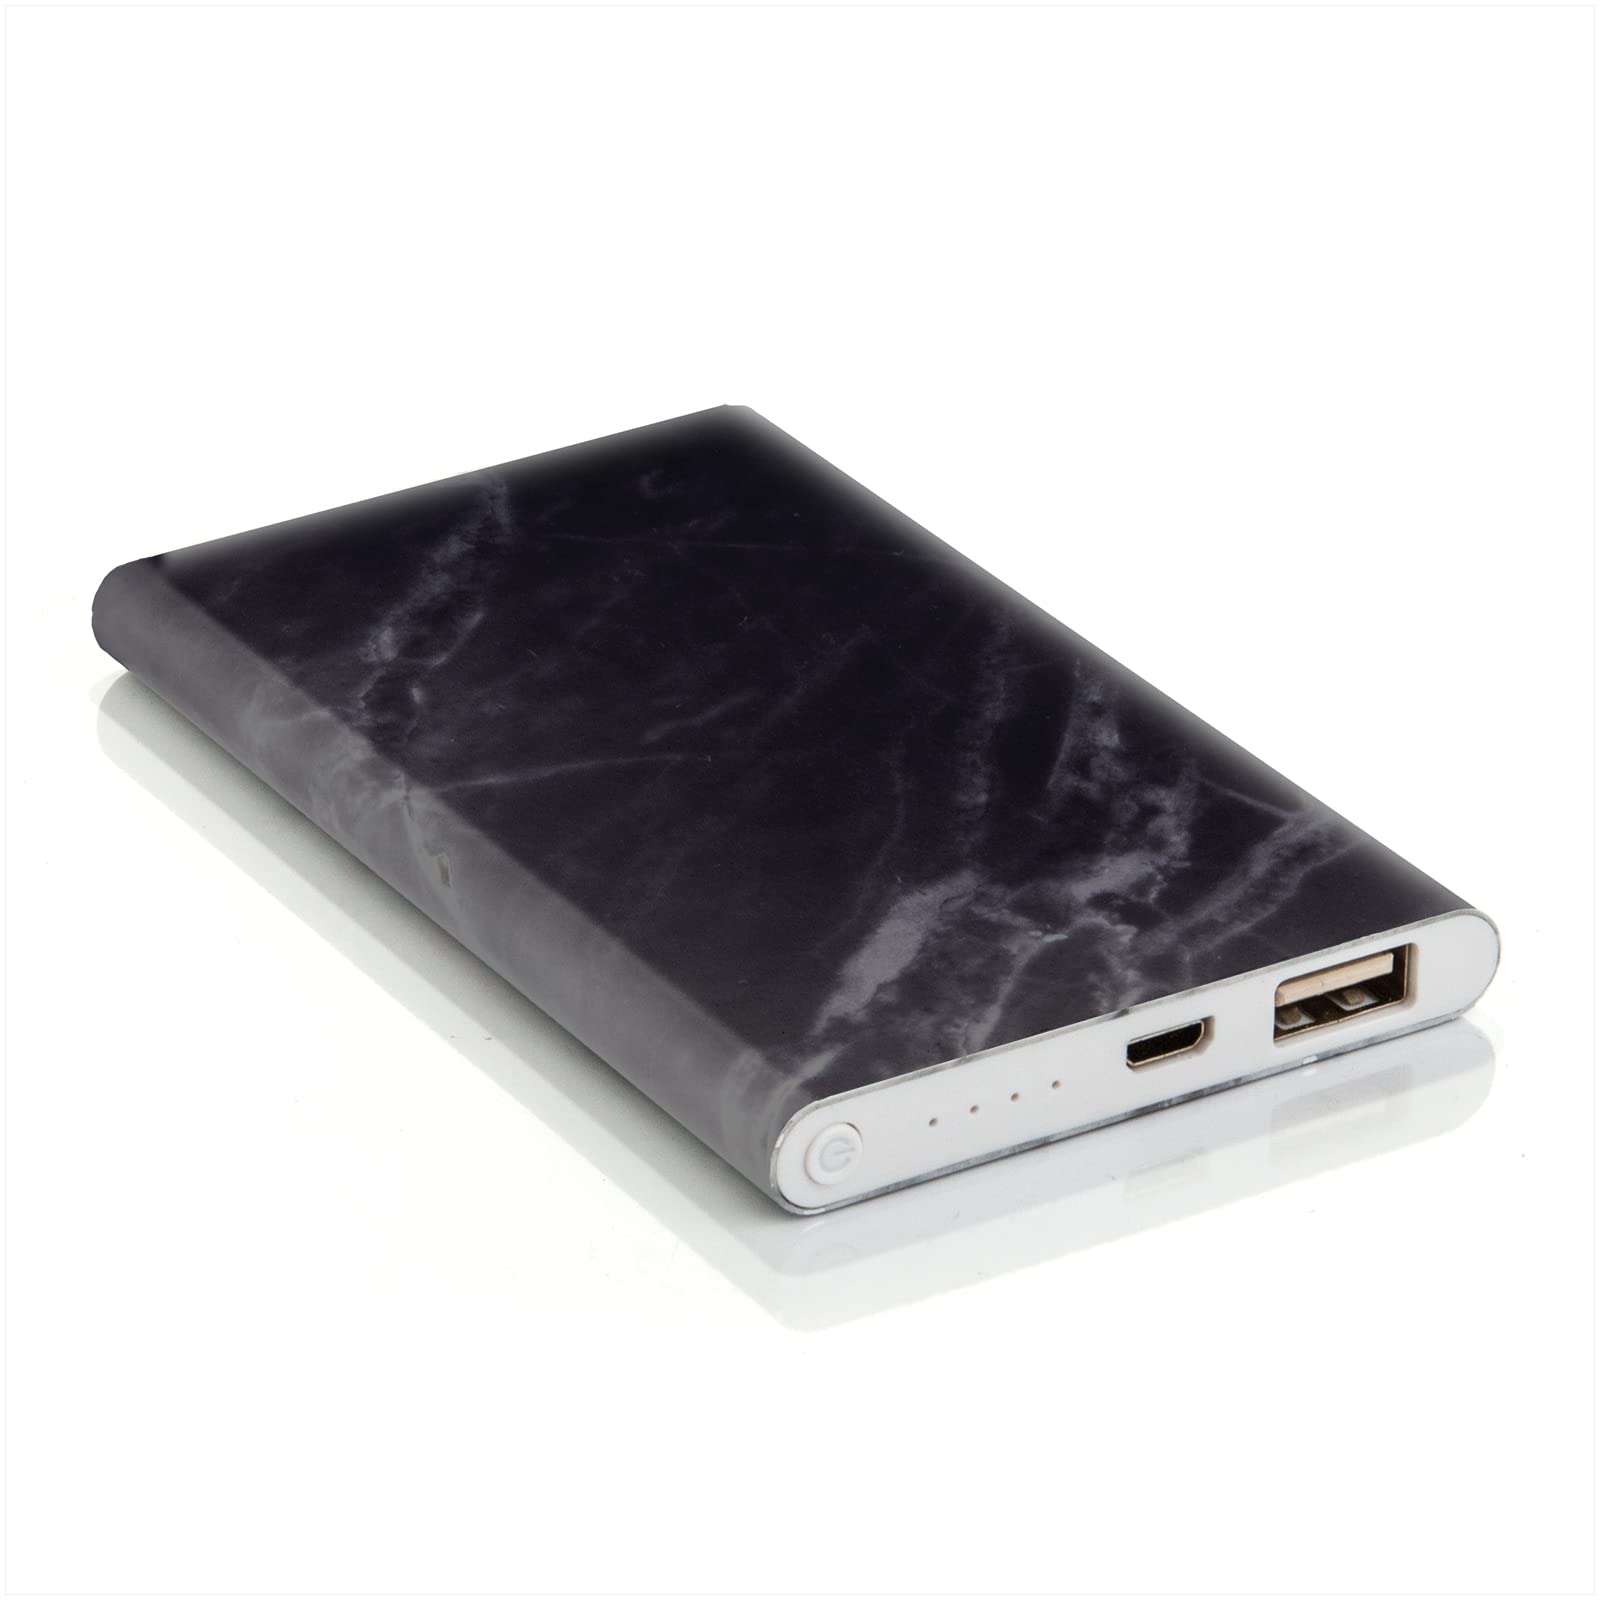 Good Design Works Tragbare Powerbank 4000mAh USB Handy Smartphone Ladegerät in Marmor - Geeignet für iPhone, Tablets und Elektrogeräte